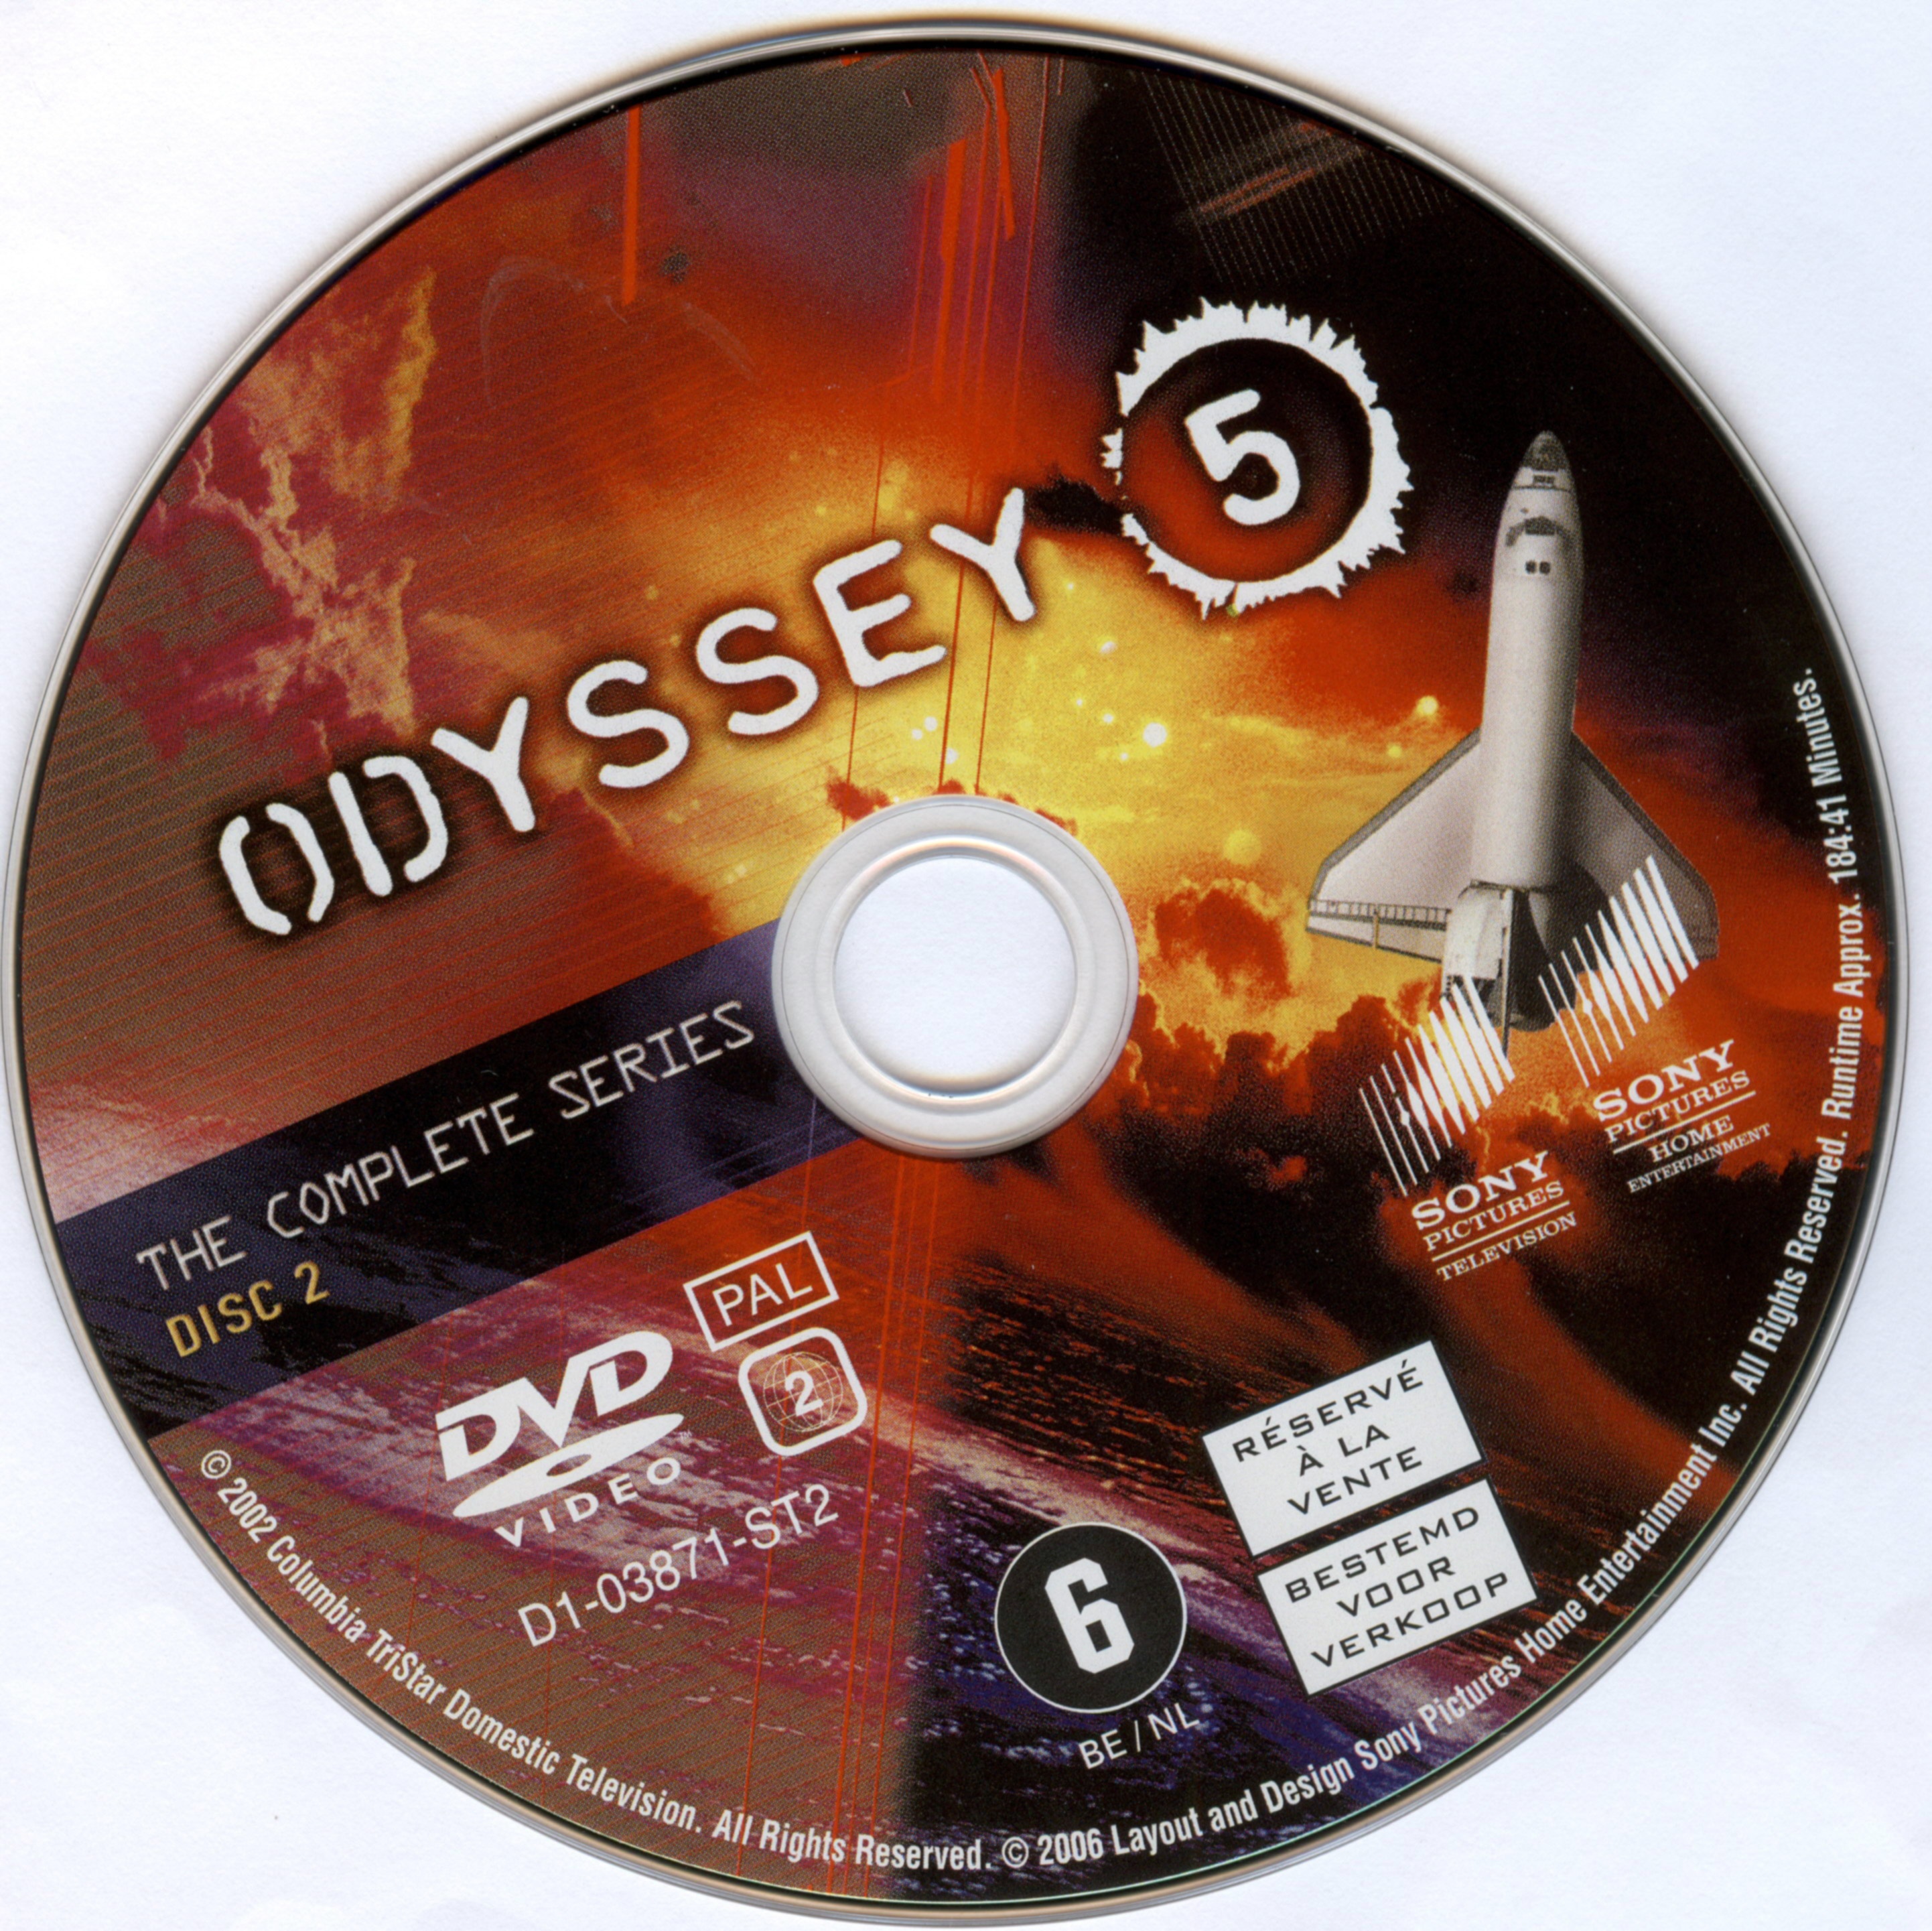 Odyssey 5 DISC 2